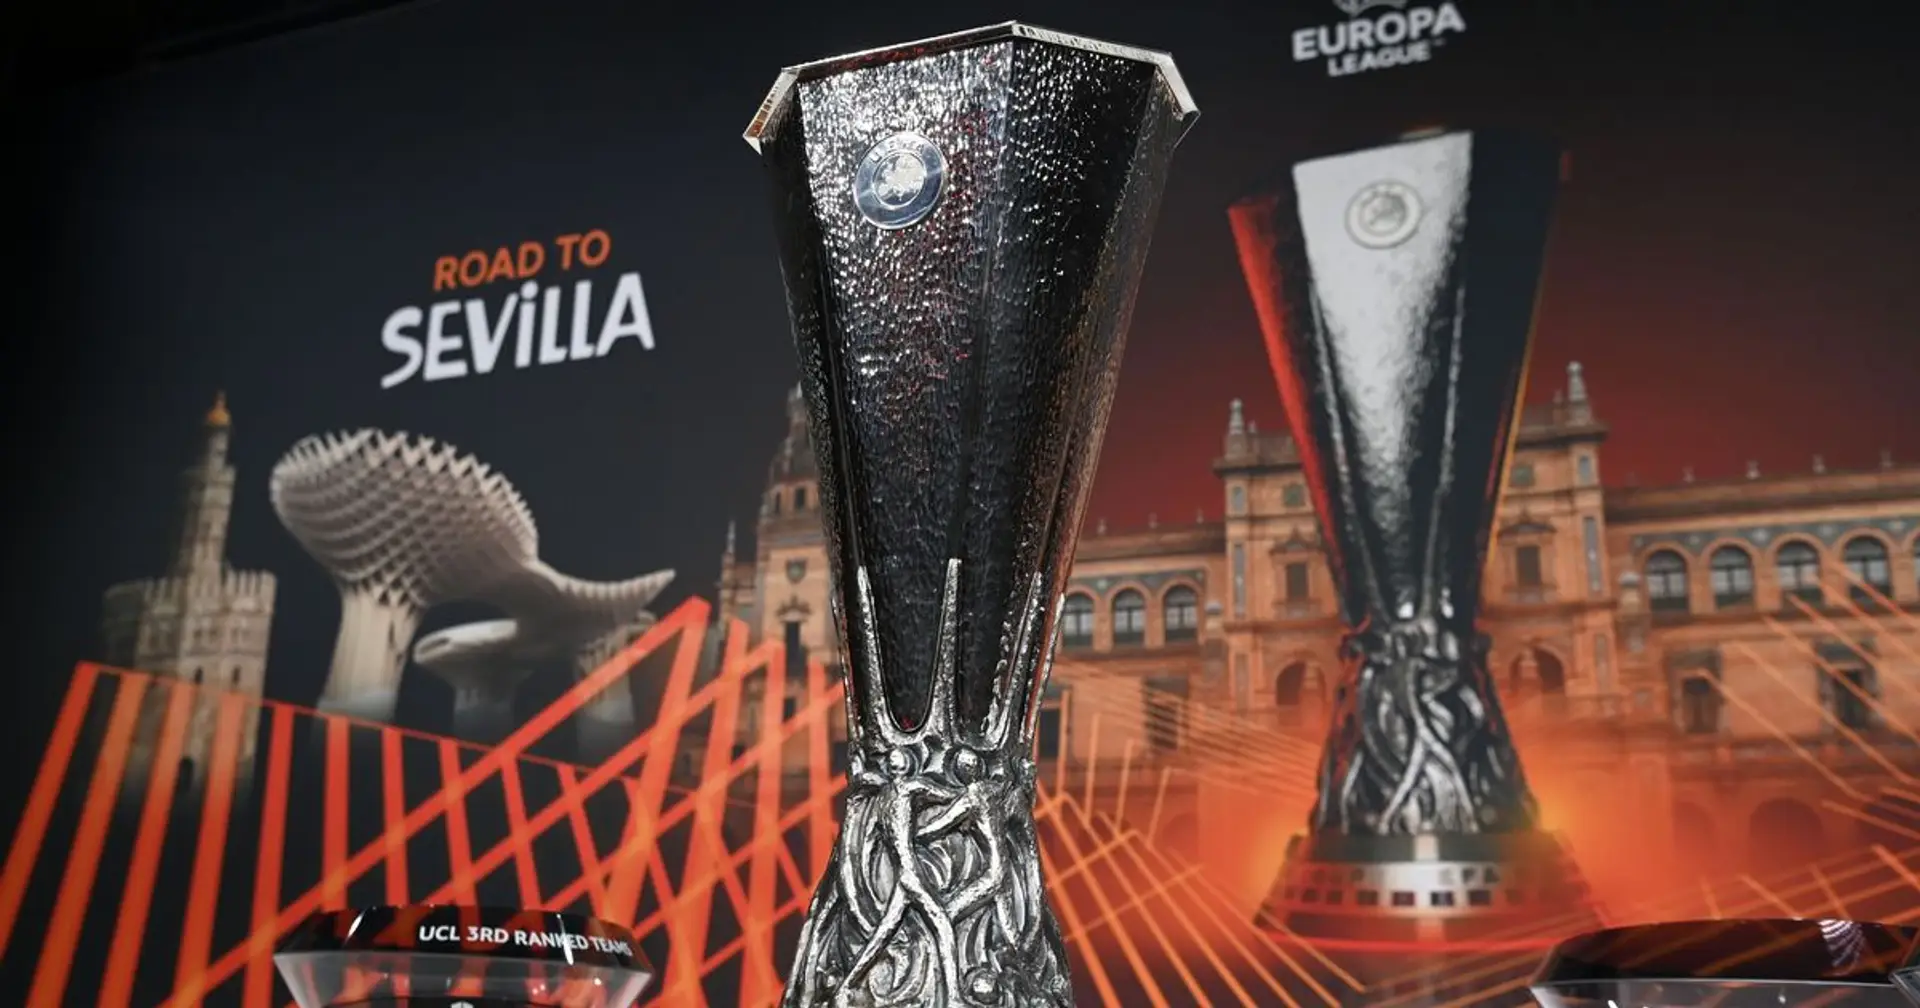 BREAKING: 2021/22 Europa League quarter-final and semi-final draw revealed